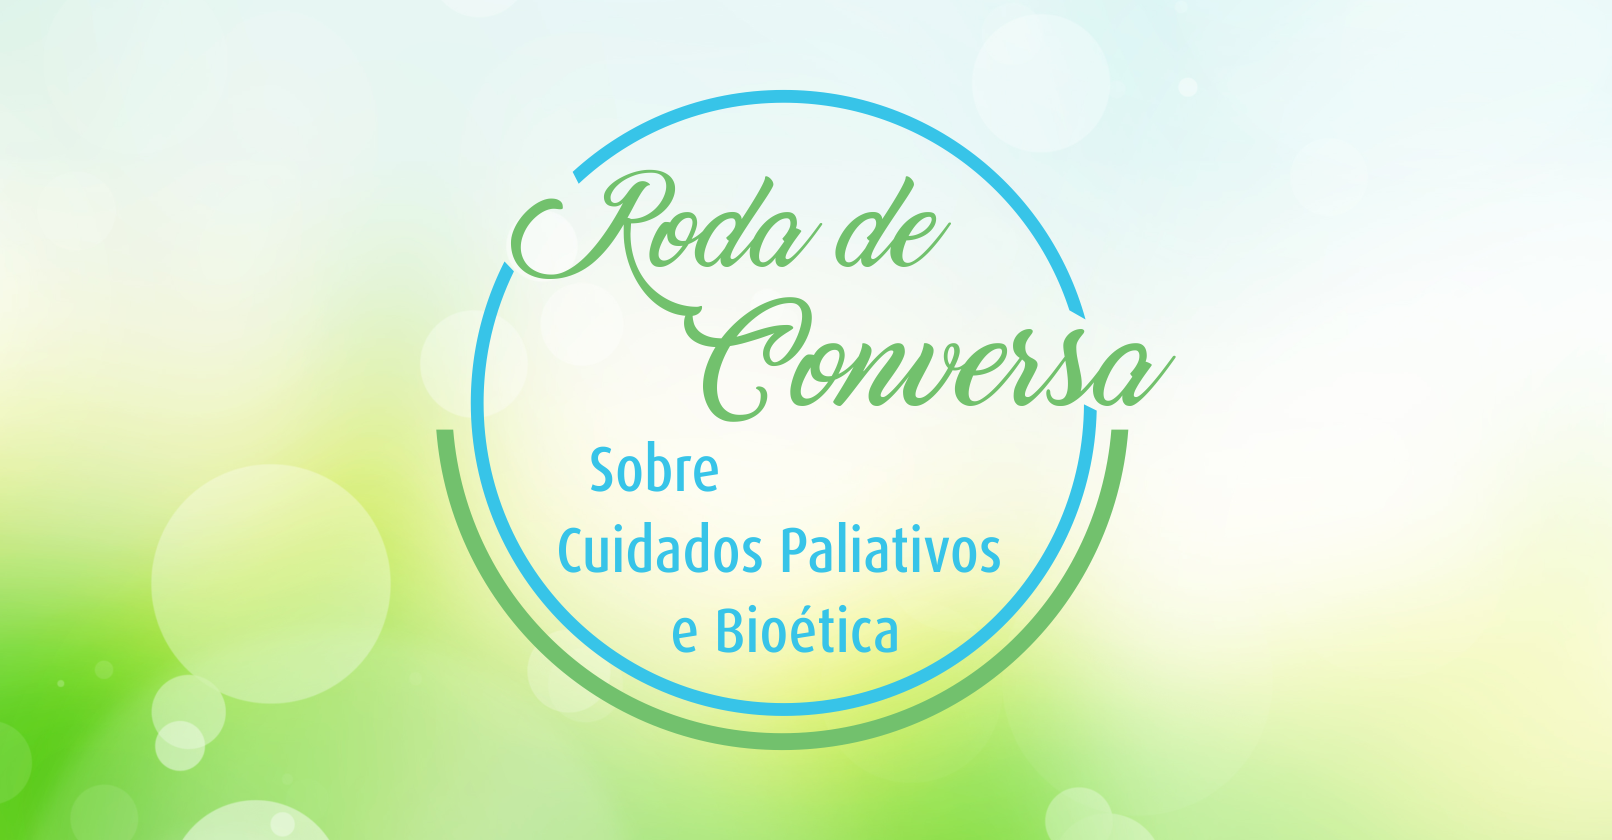 Valencis Curitiba Hospice promove Roda de Conversa sobre Cuidados Paliativos e Bioética